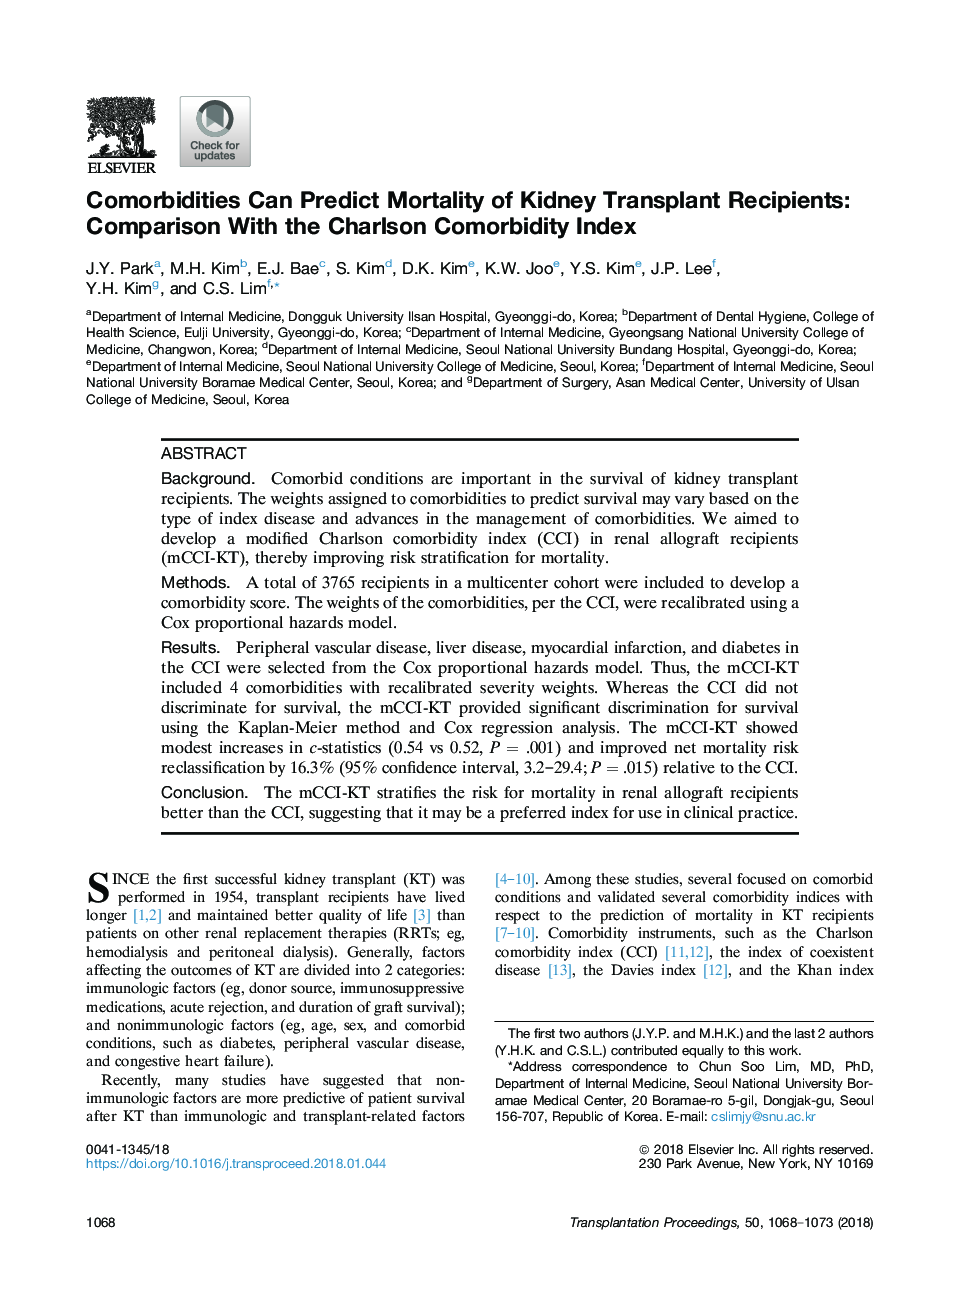 Comorbidities Can Predict Mortality of Kidney Transplant Recipients: Comparison With the Charlson Comorbidity Index